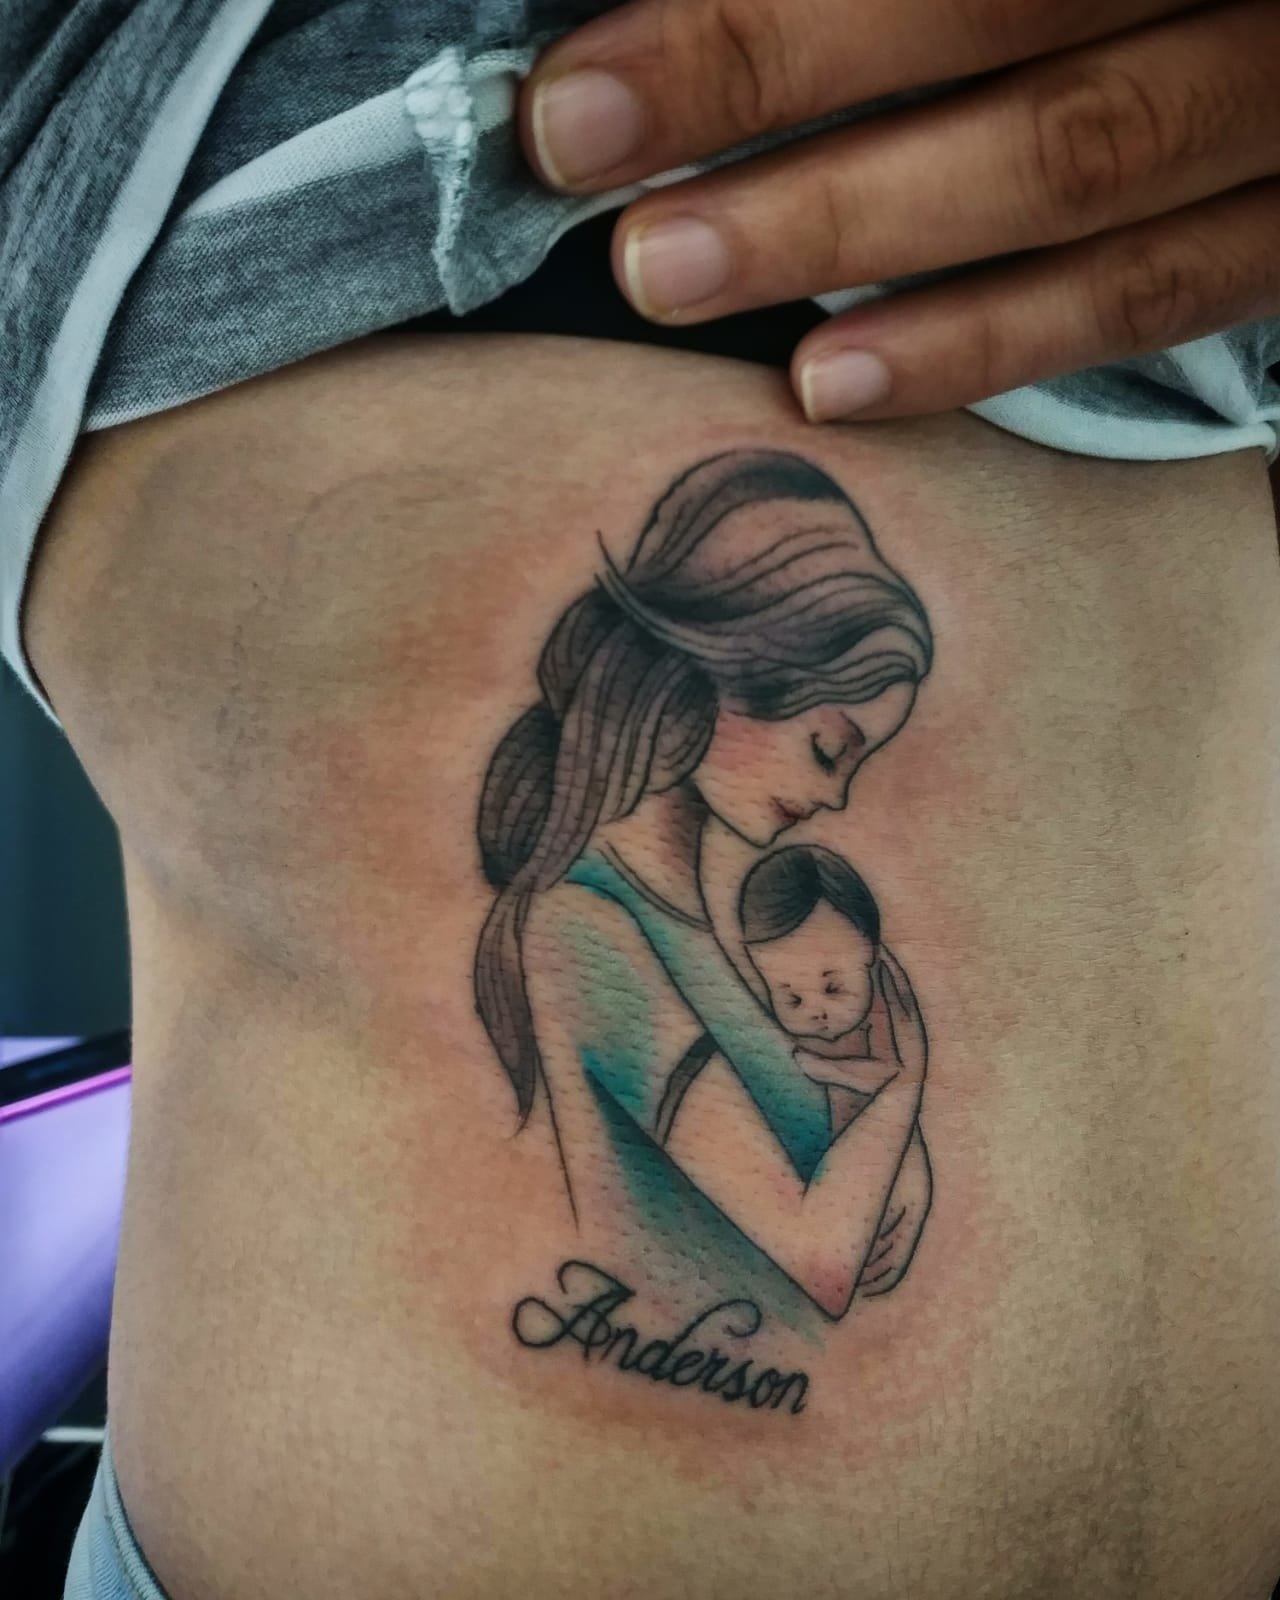 Tatuaje madre sosteniendo un bebe estilo minimalista con líneas finas